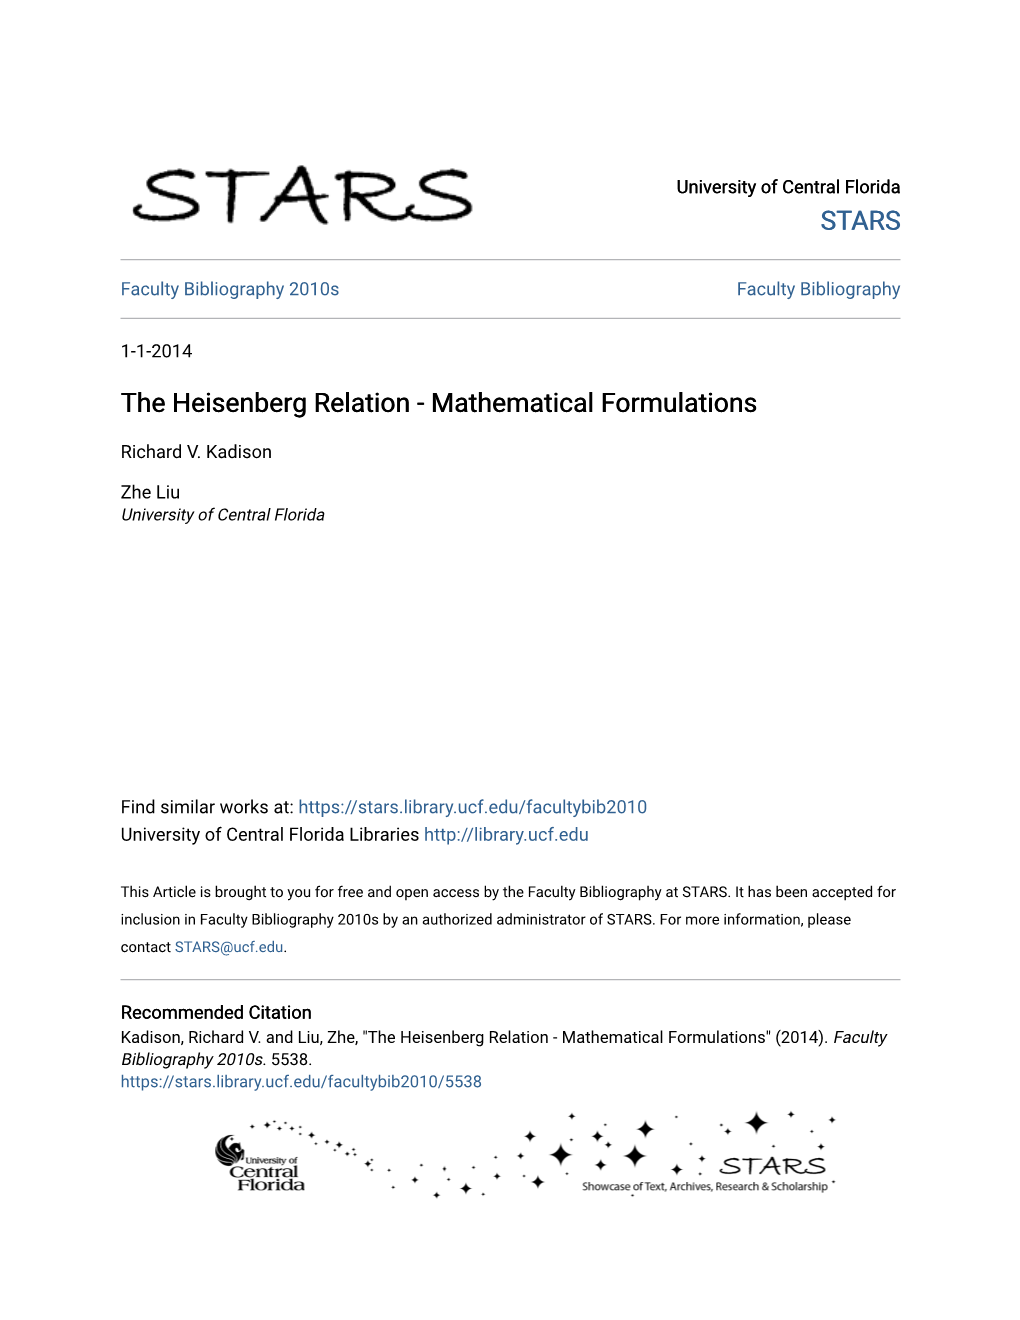 The Heisenberg Relation - Mathematical Formulations